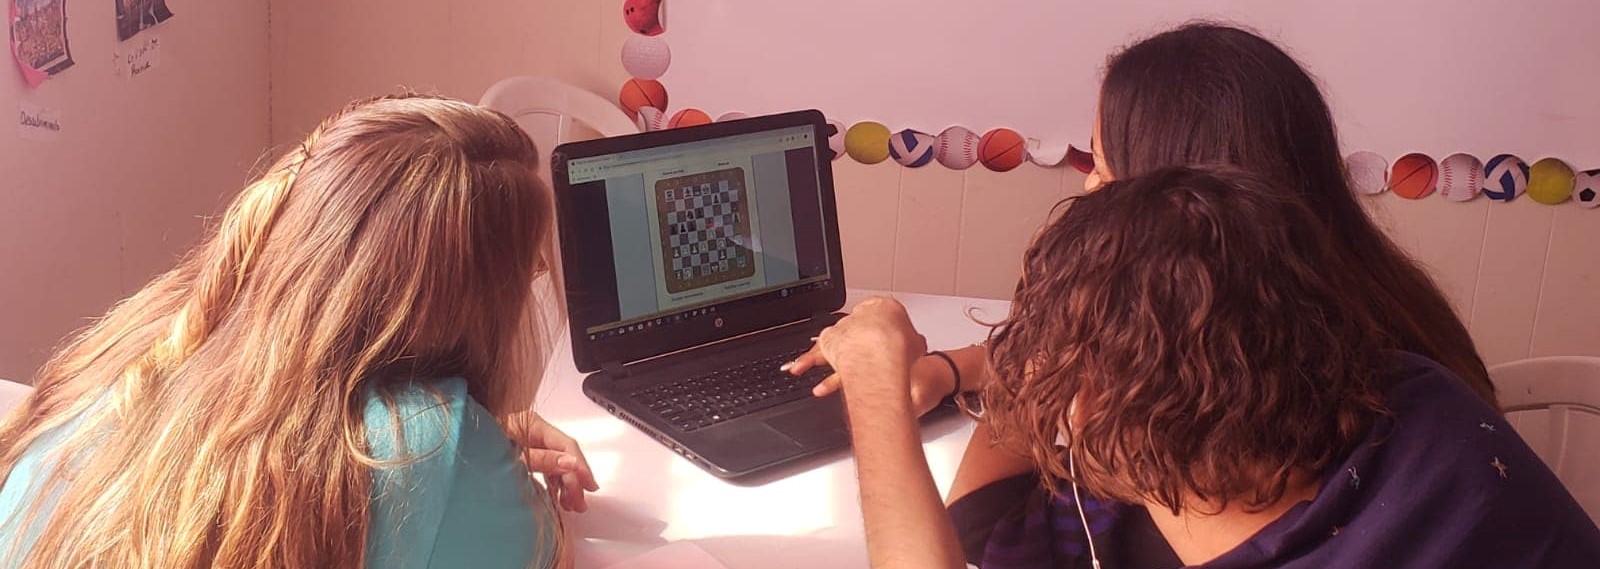 School girls working on their homework digitally